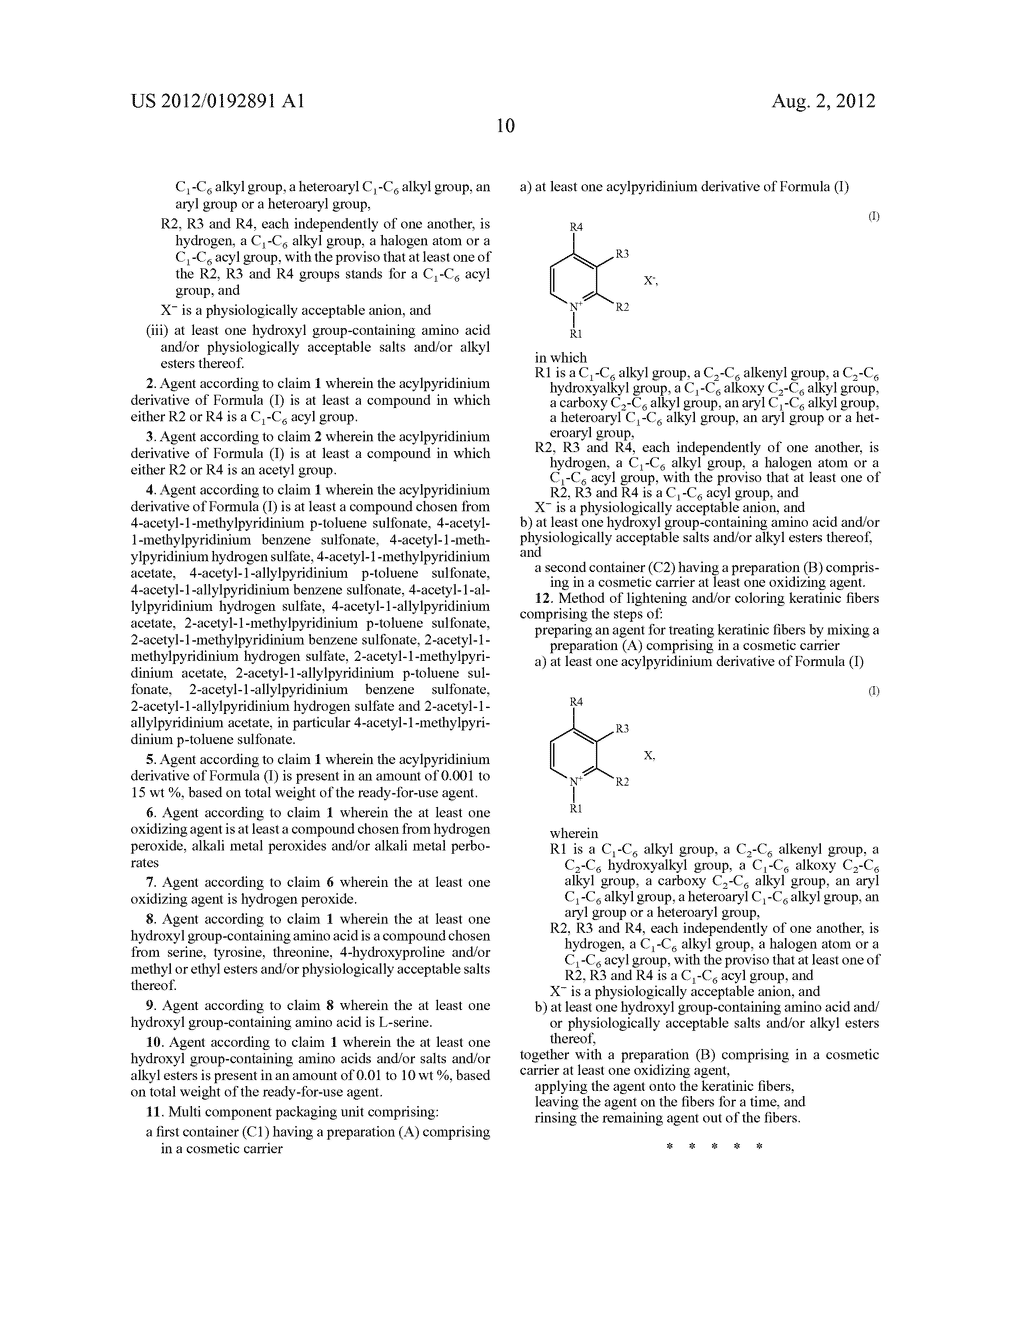 LIGHTENING AGENT HAVING CATIONIC ACYLPYRIDINIUM DERIVATIVES AND CERTAIN     AMINO ACIDS - diagram, schematic, and image 11